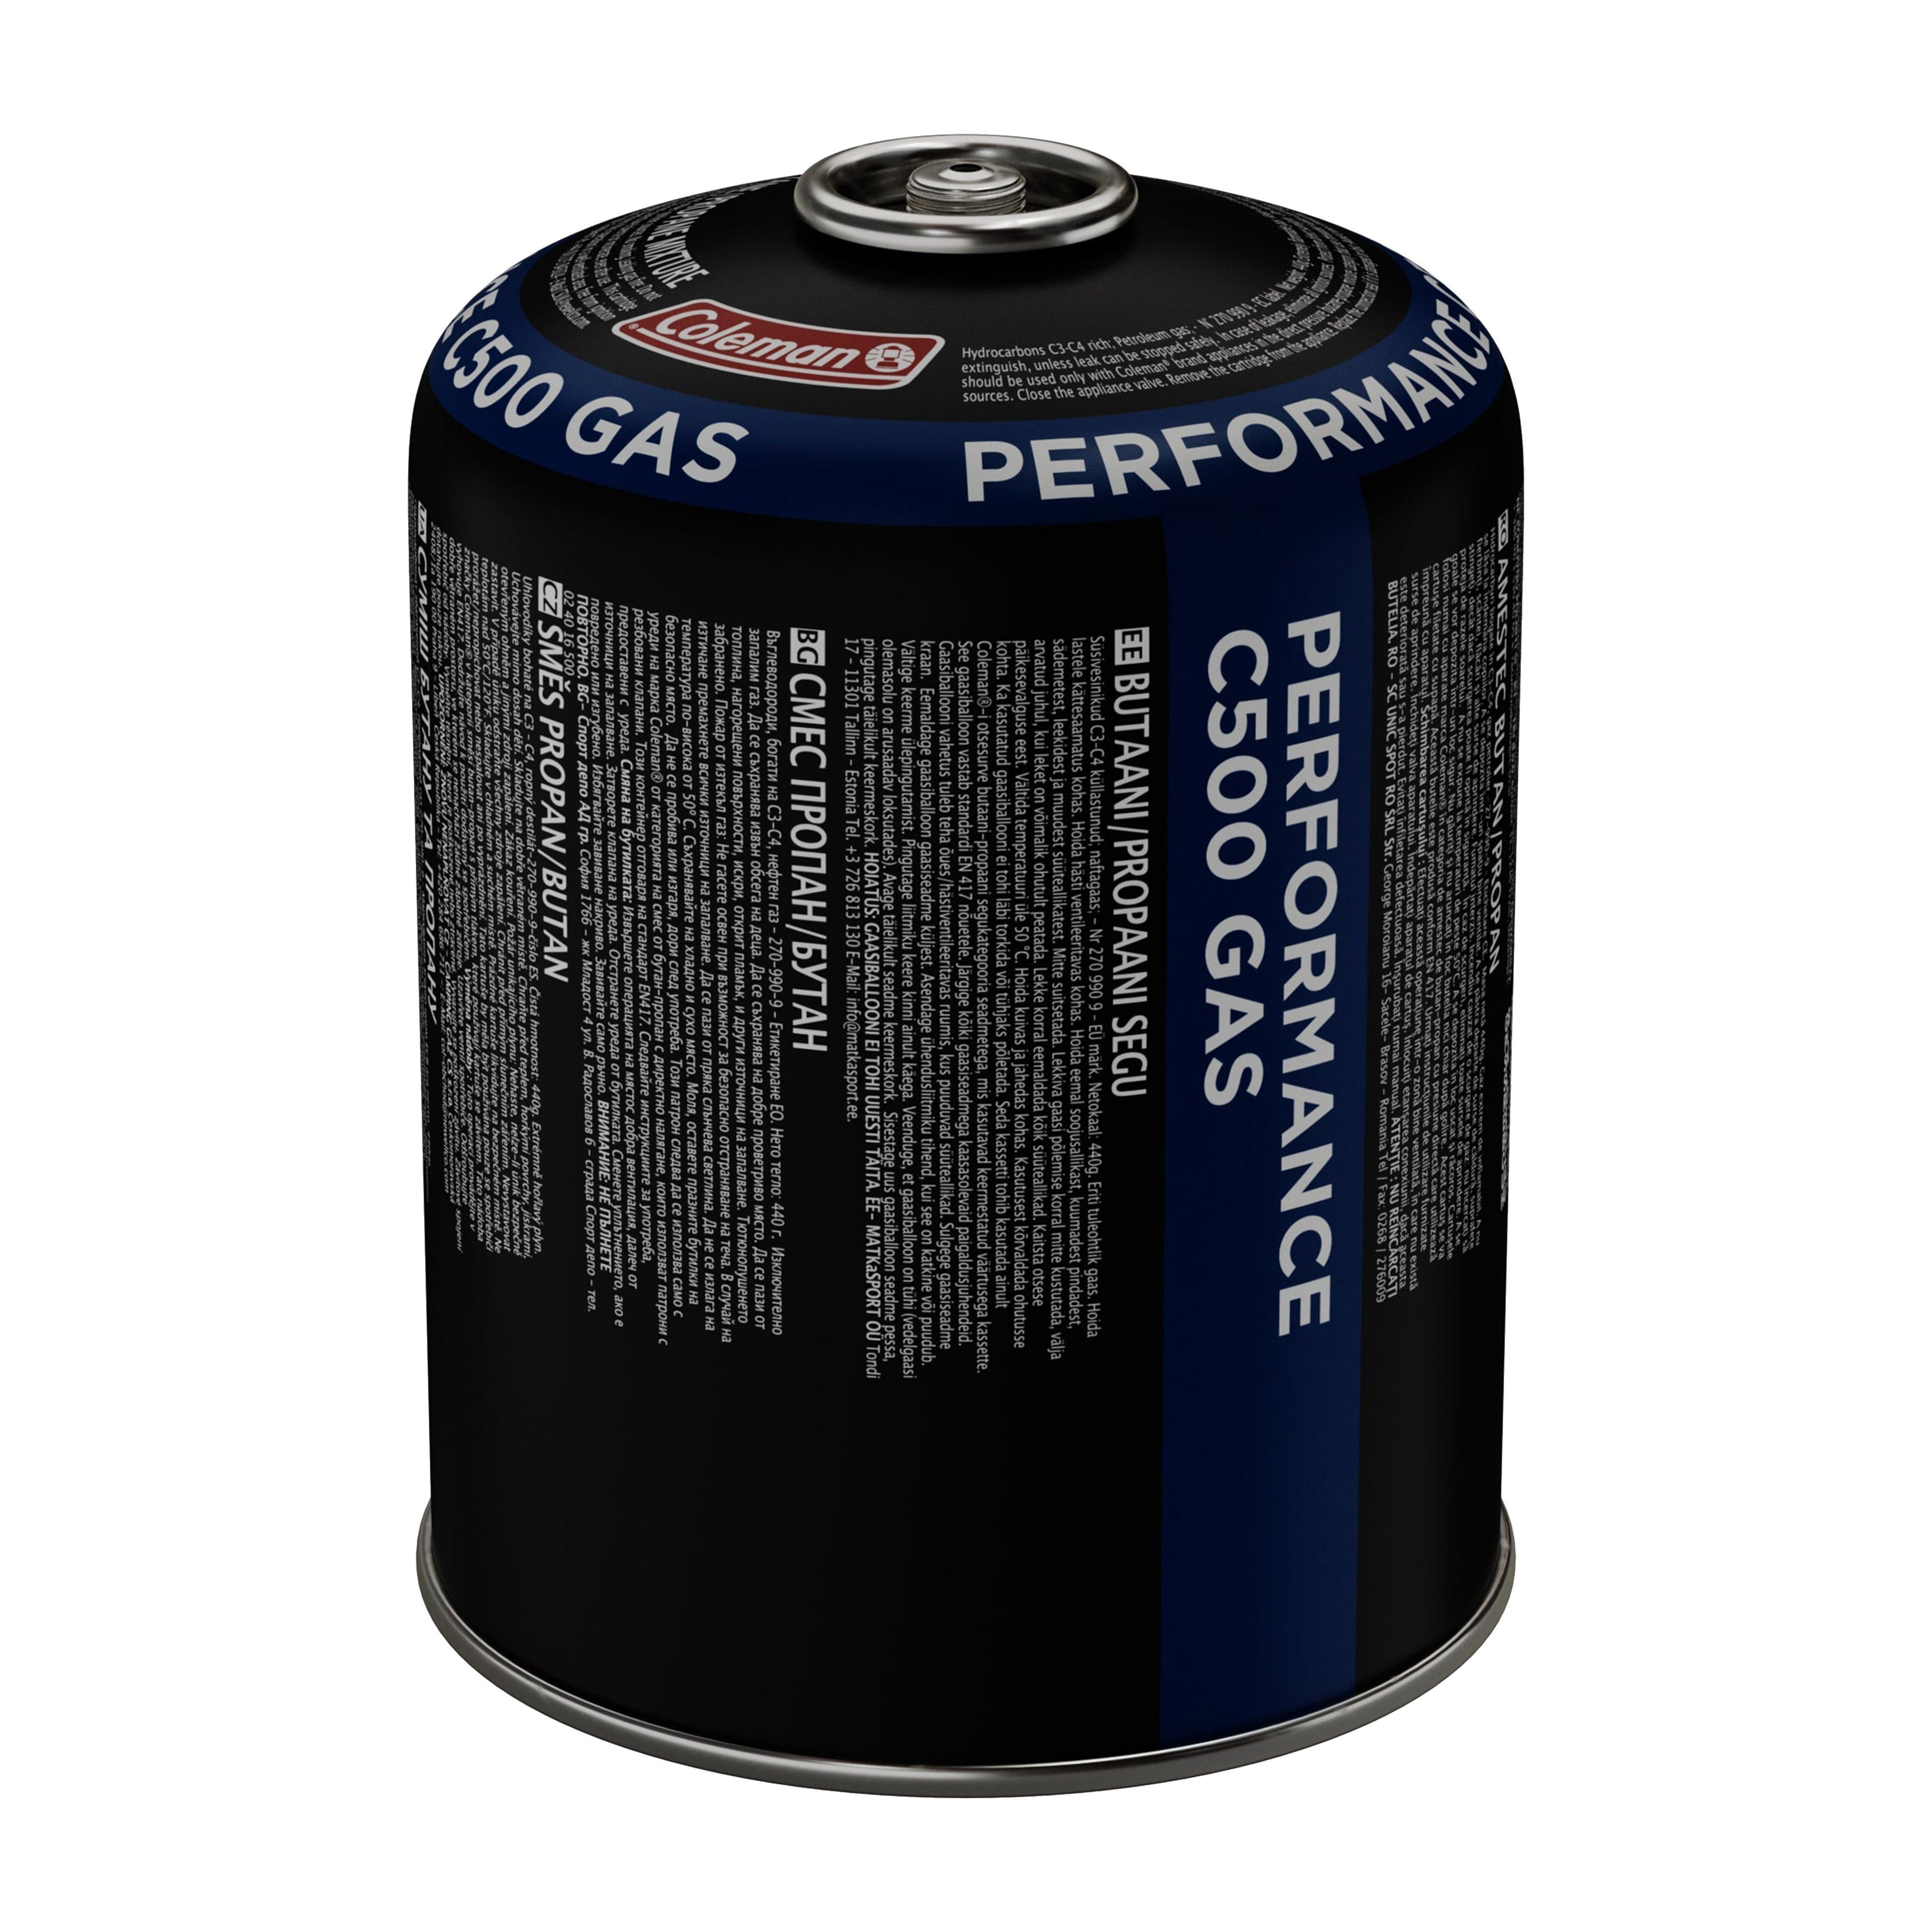 Coleman C500 Performance Gas Cartridge Review